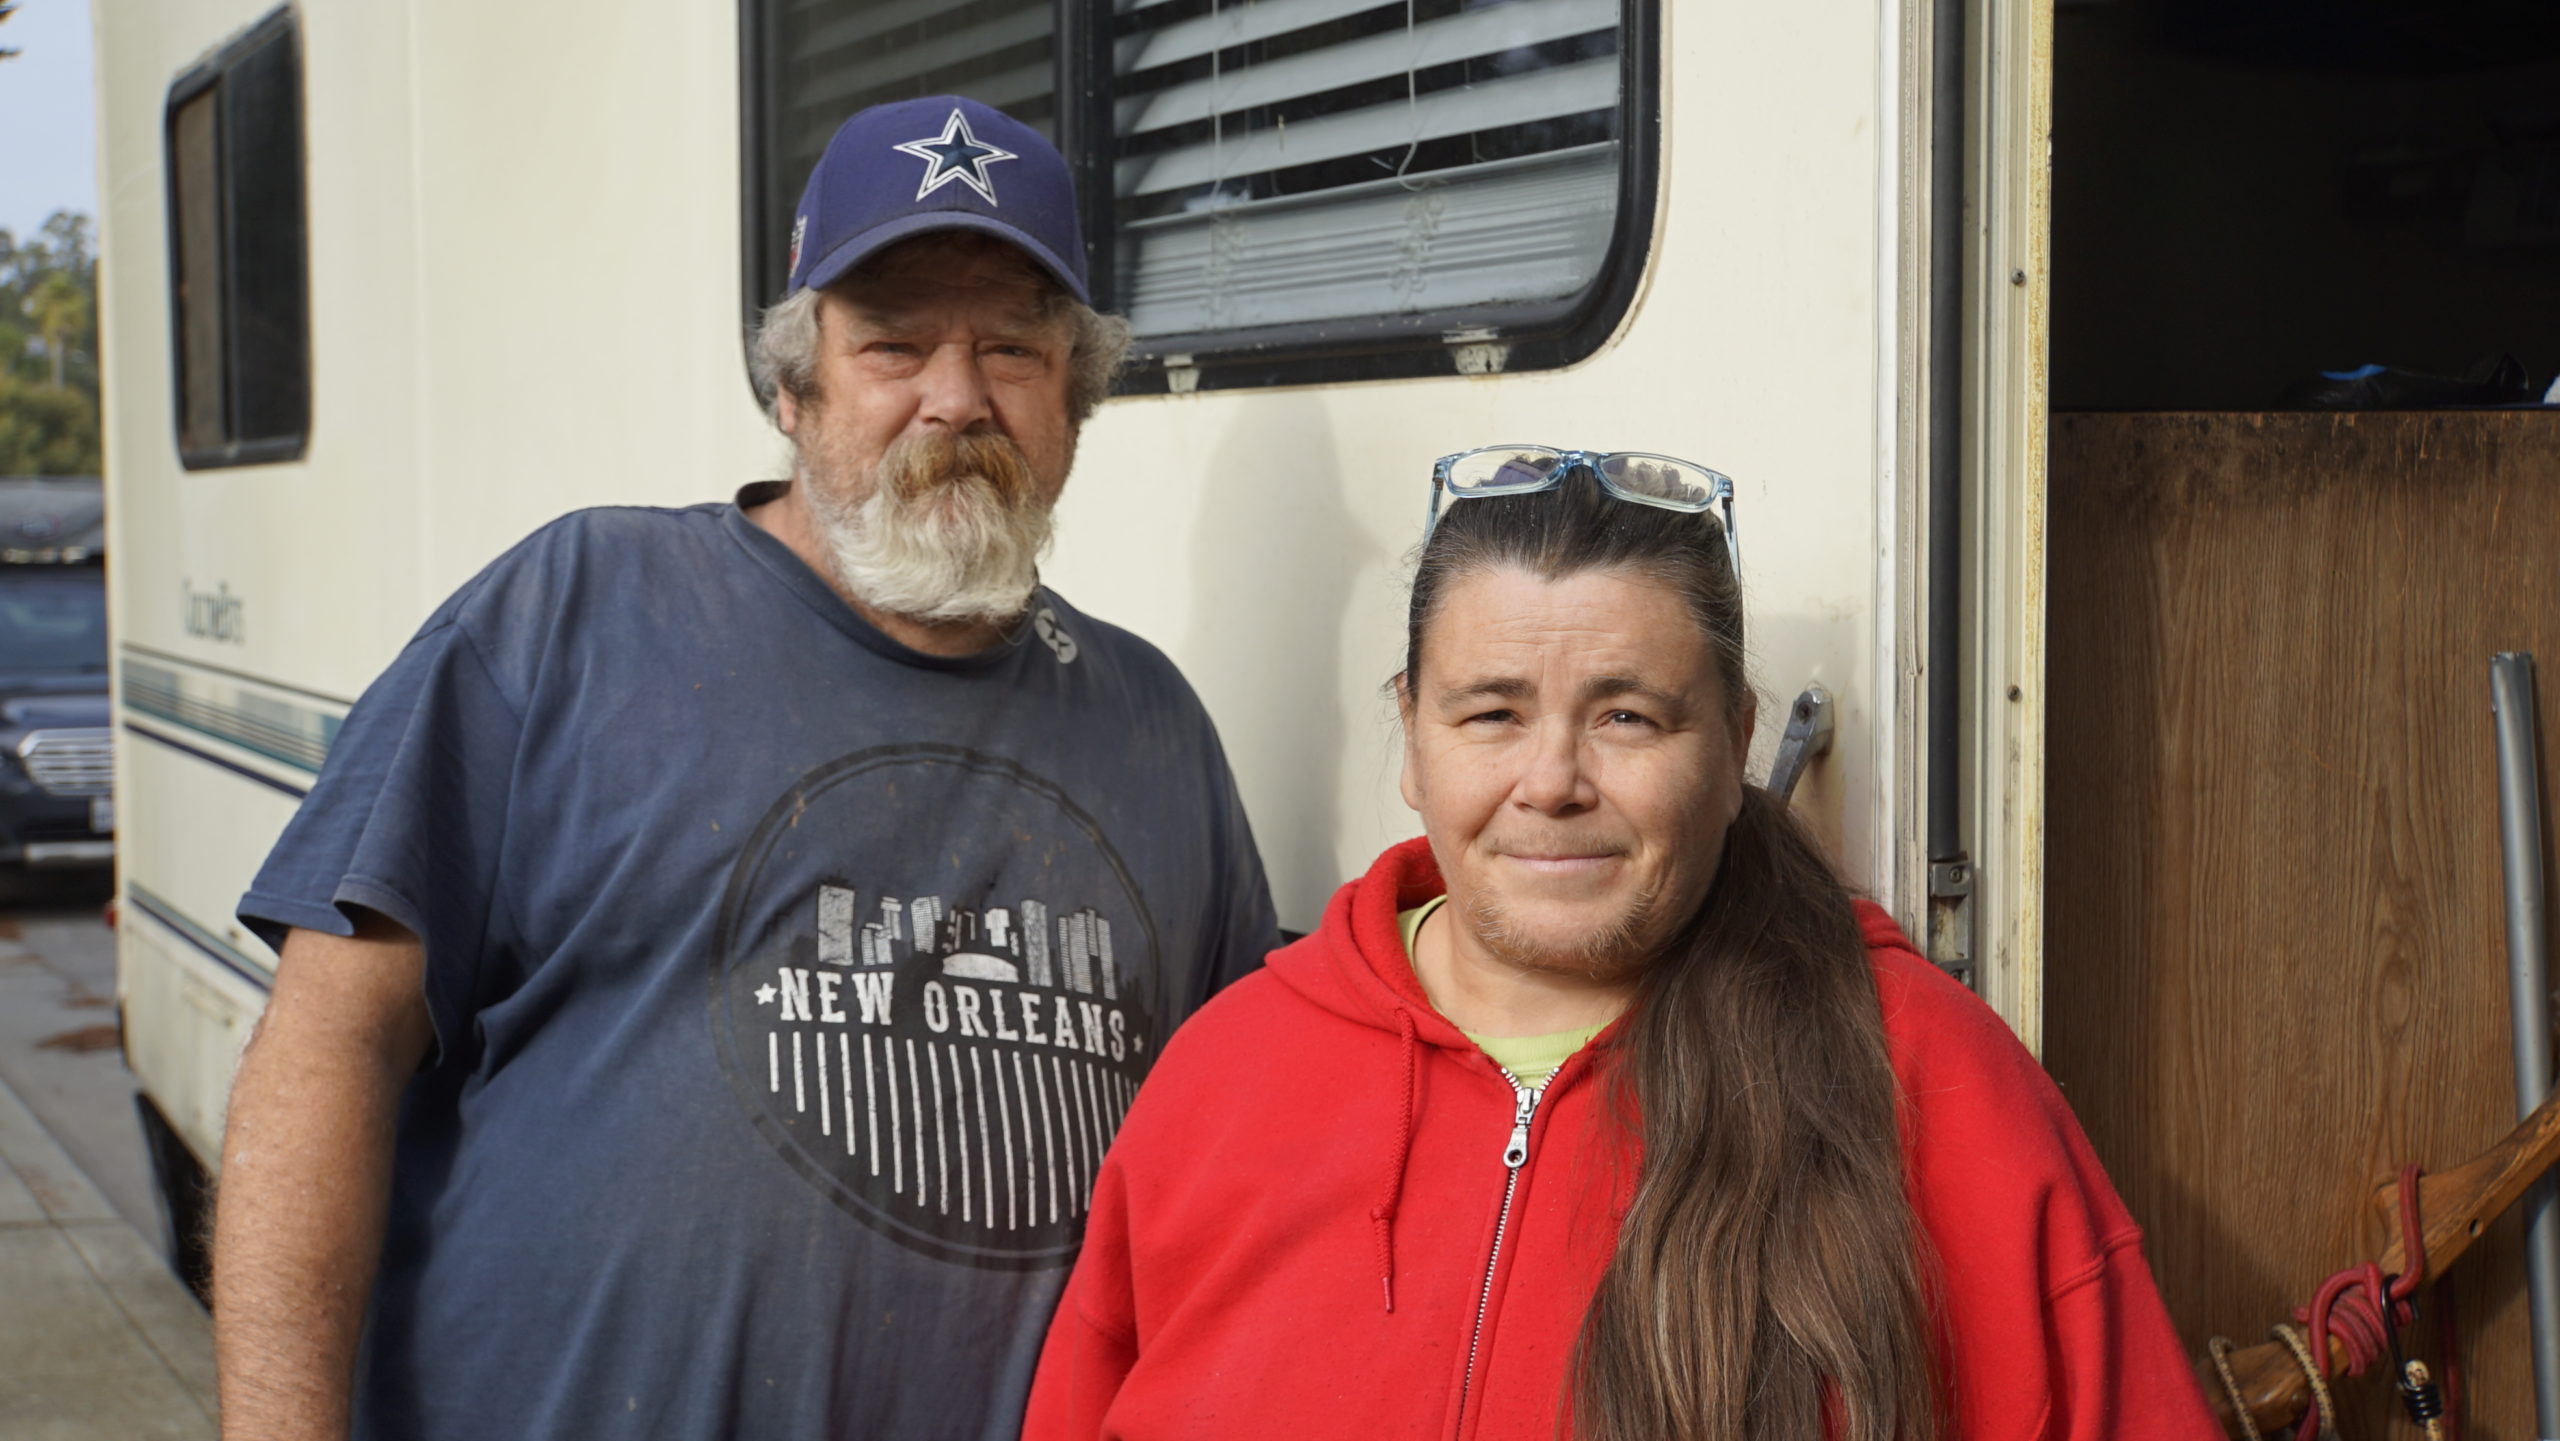 Brian Ashe and Sherri Fry stand next to their RV on Natural Bridges Drive in Santa Cruz